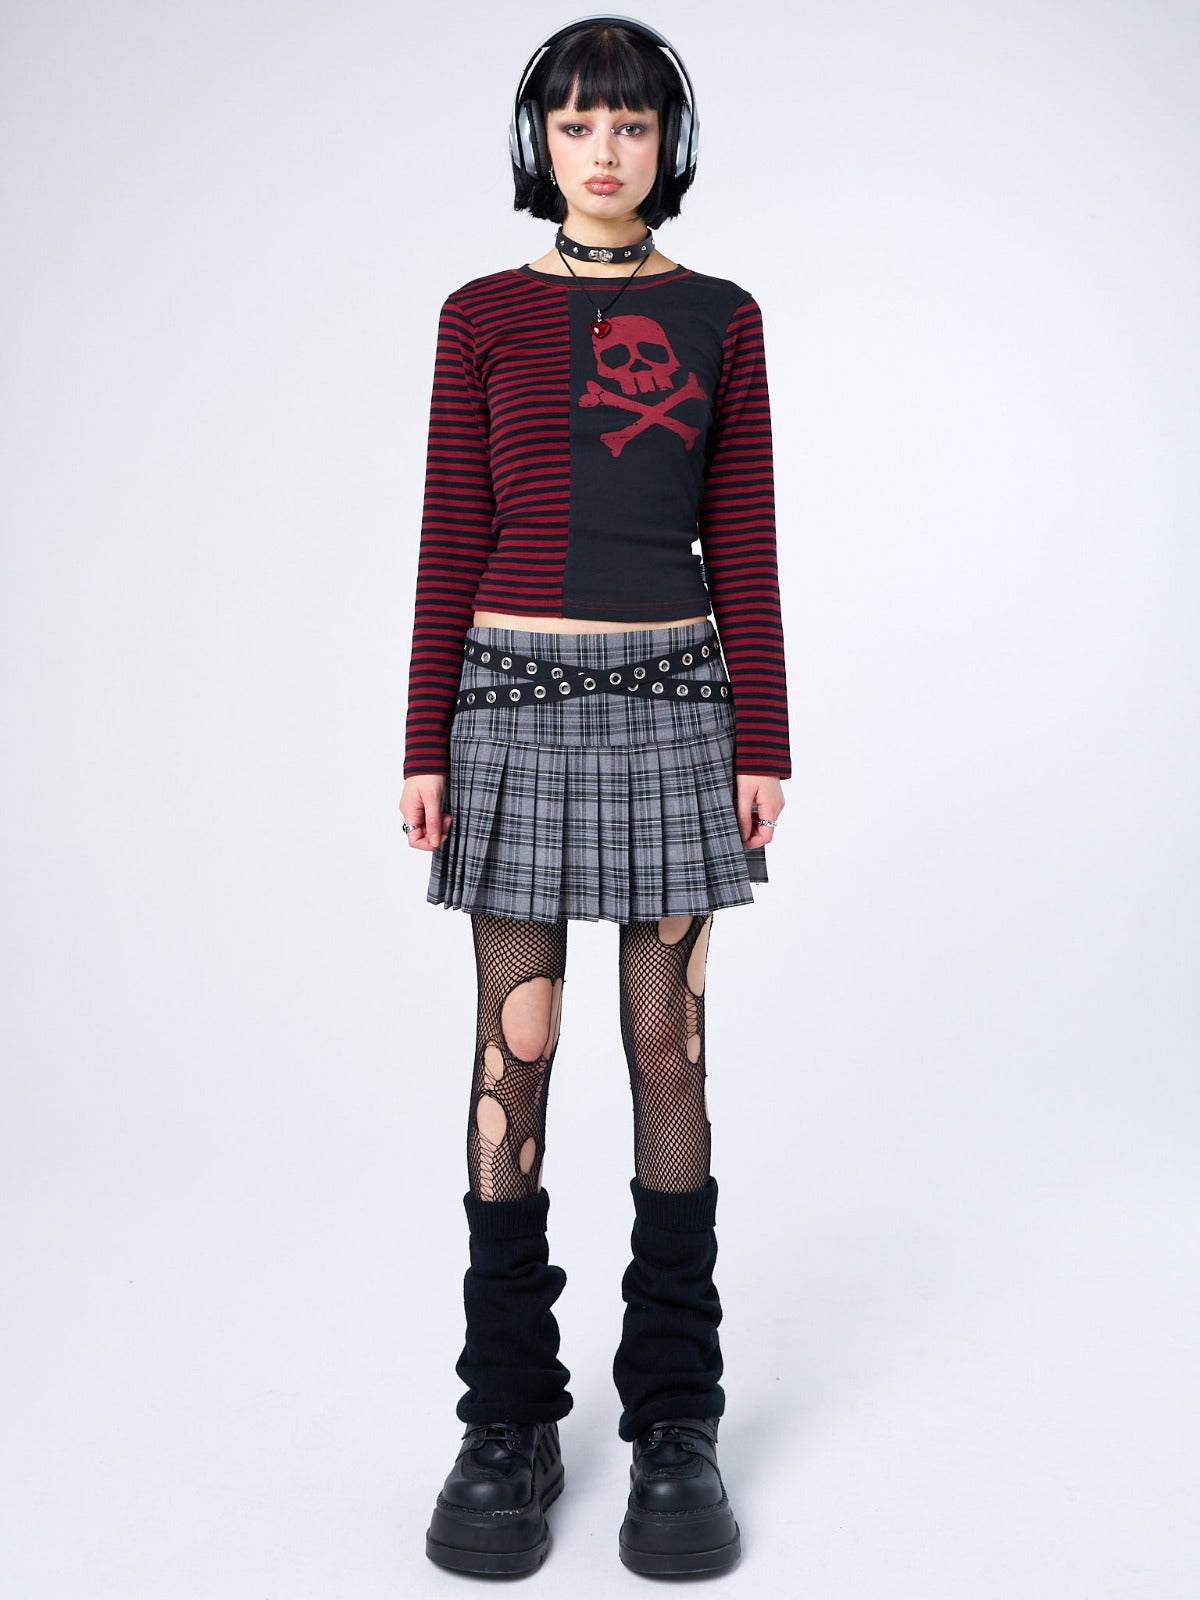 Meryl Grey & Black Tartan Mini Skirt